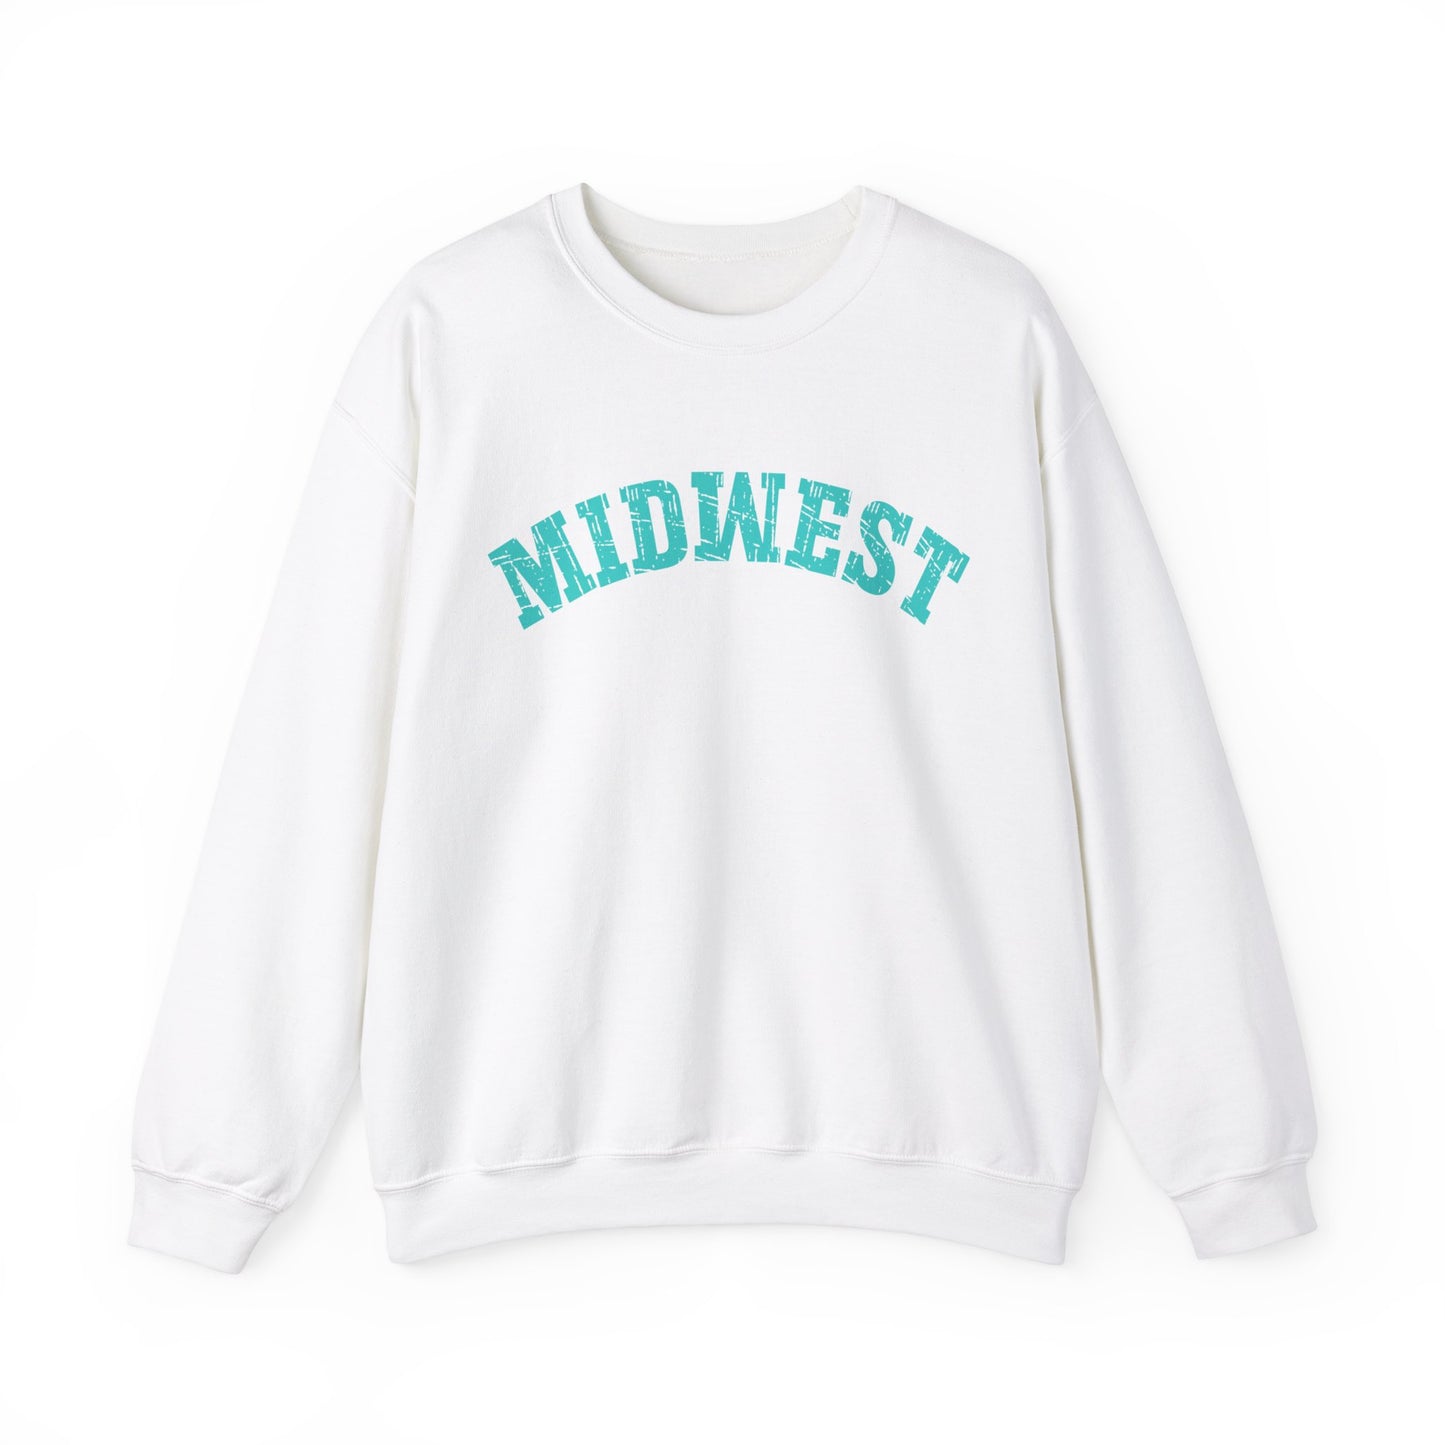 MIDWEST Unisex Adult Sweatshirt